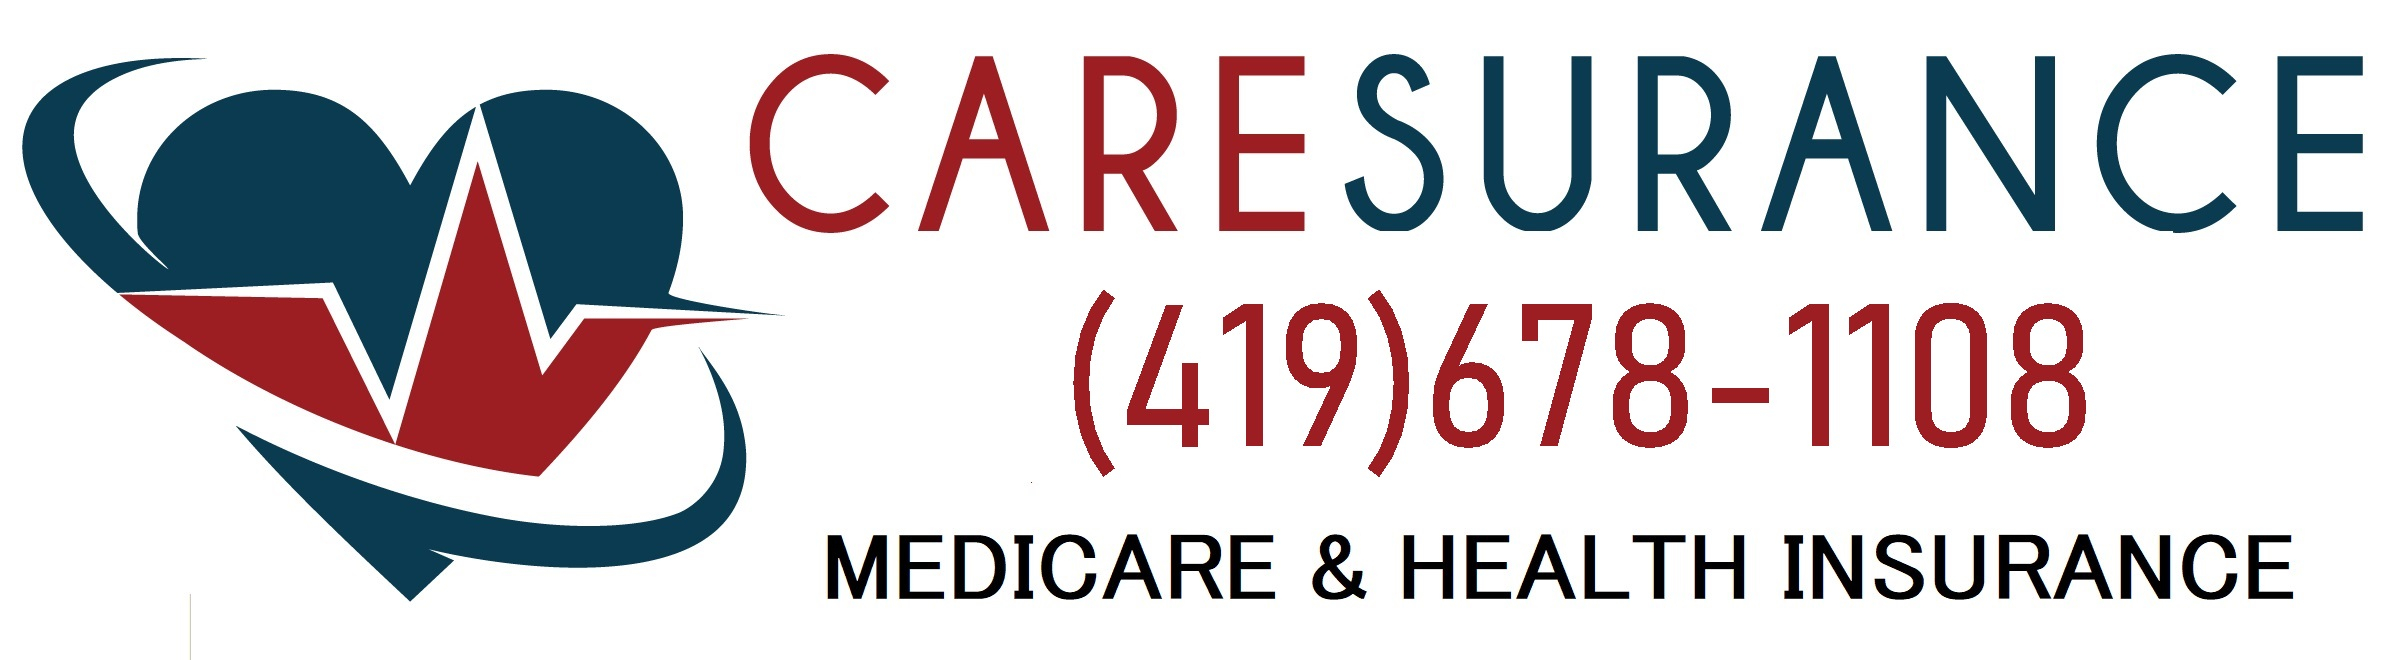 caresurance horizontal MEDICARE AND Health Insurance.jpg